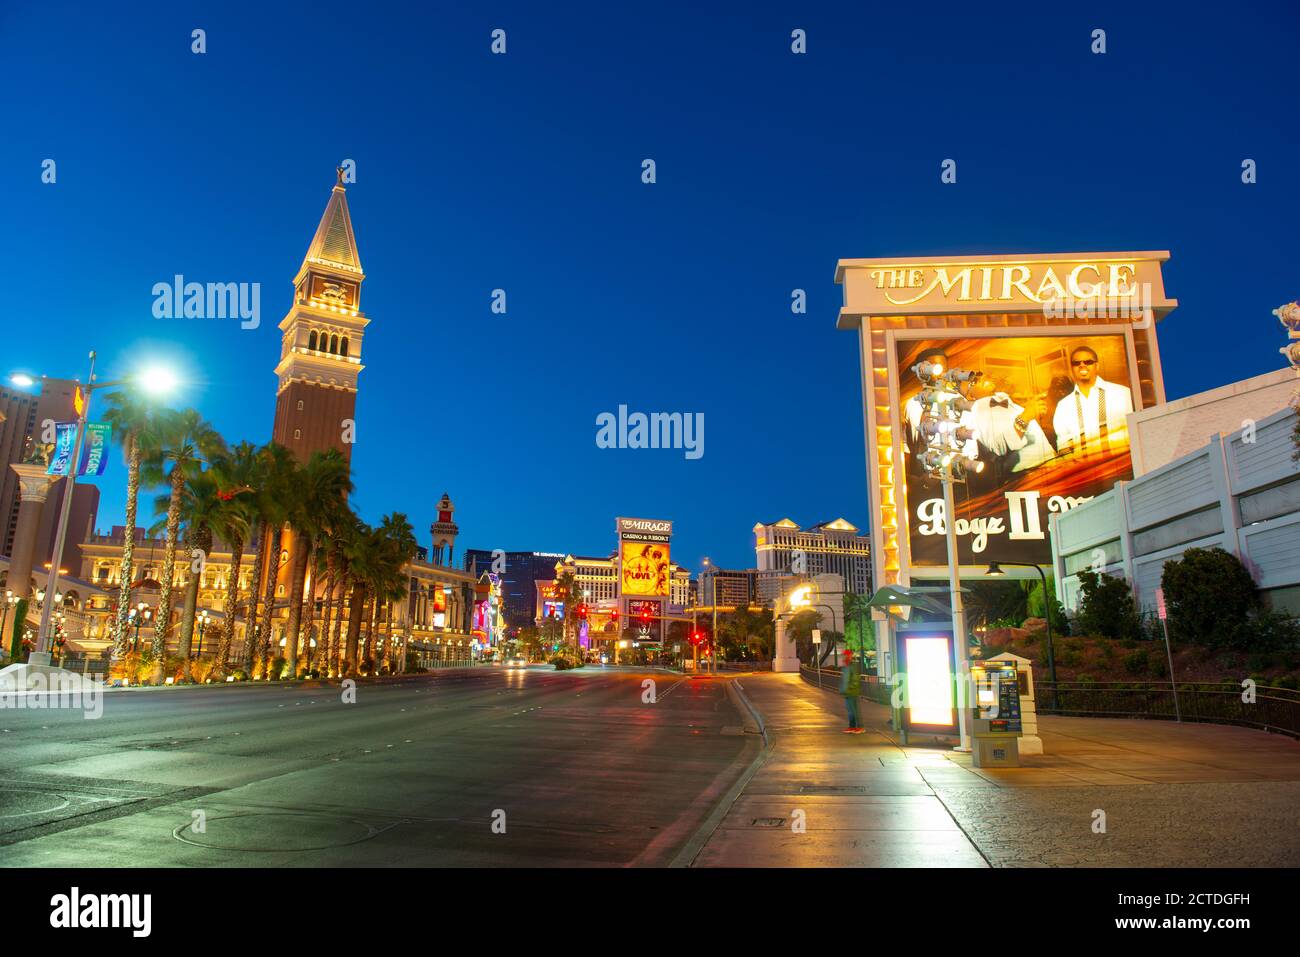 Campanile di San Marco (Campanile di San Marco) dei Veneziani sulla Strip di Las Vegas di notte a Las Vegas, Nevada, USA. Foto Stock